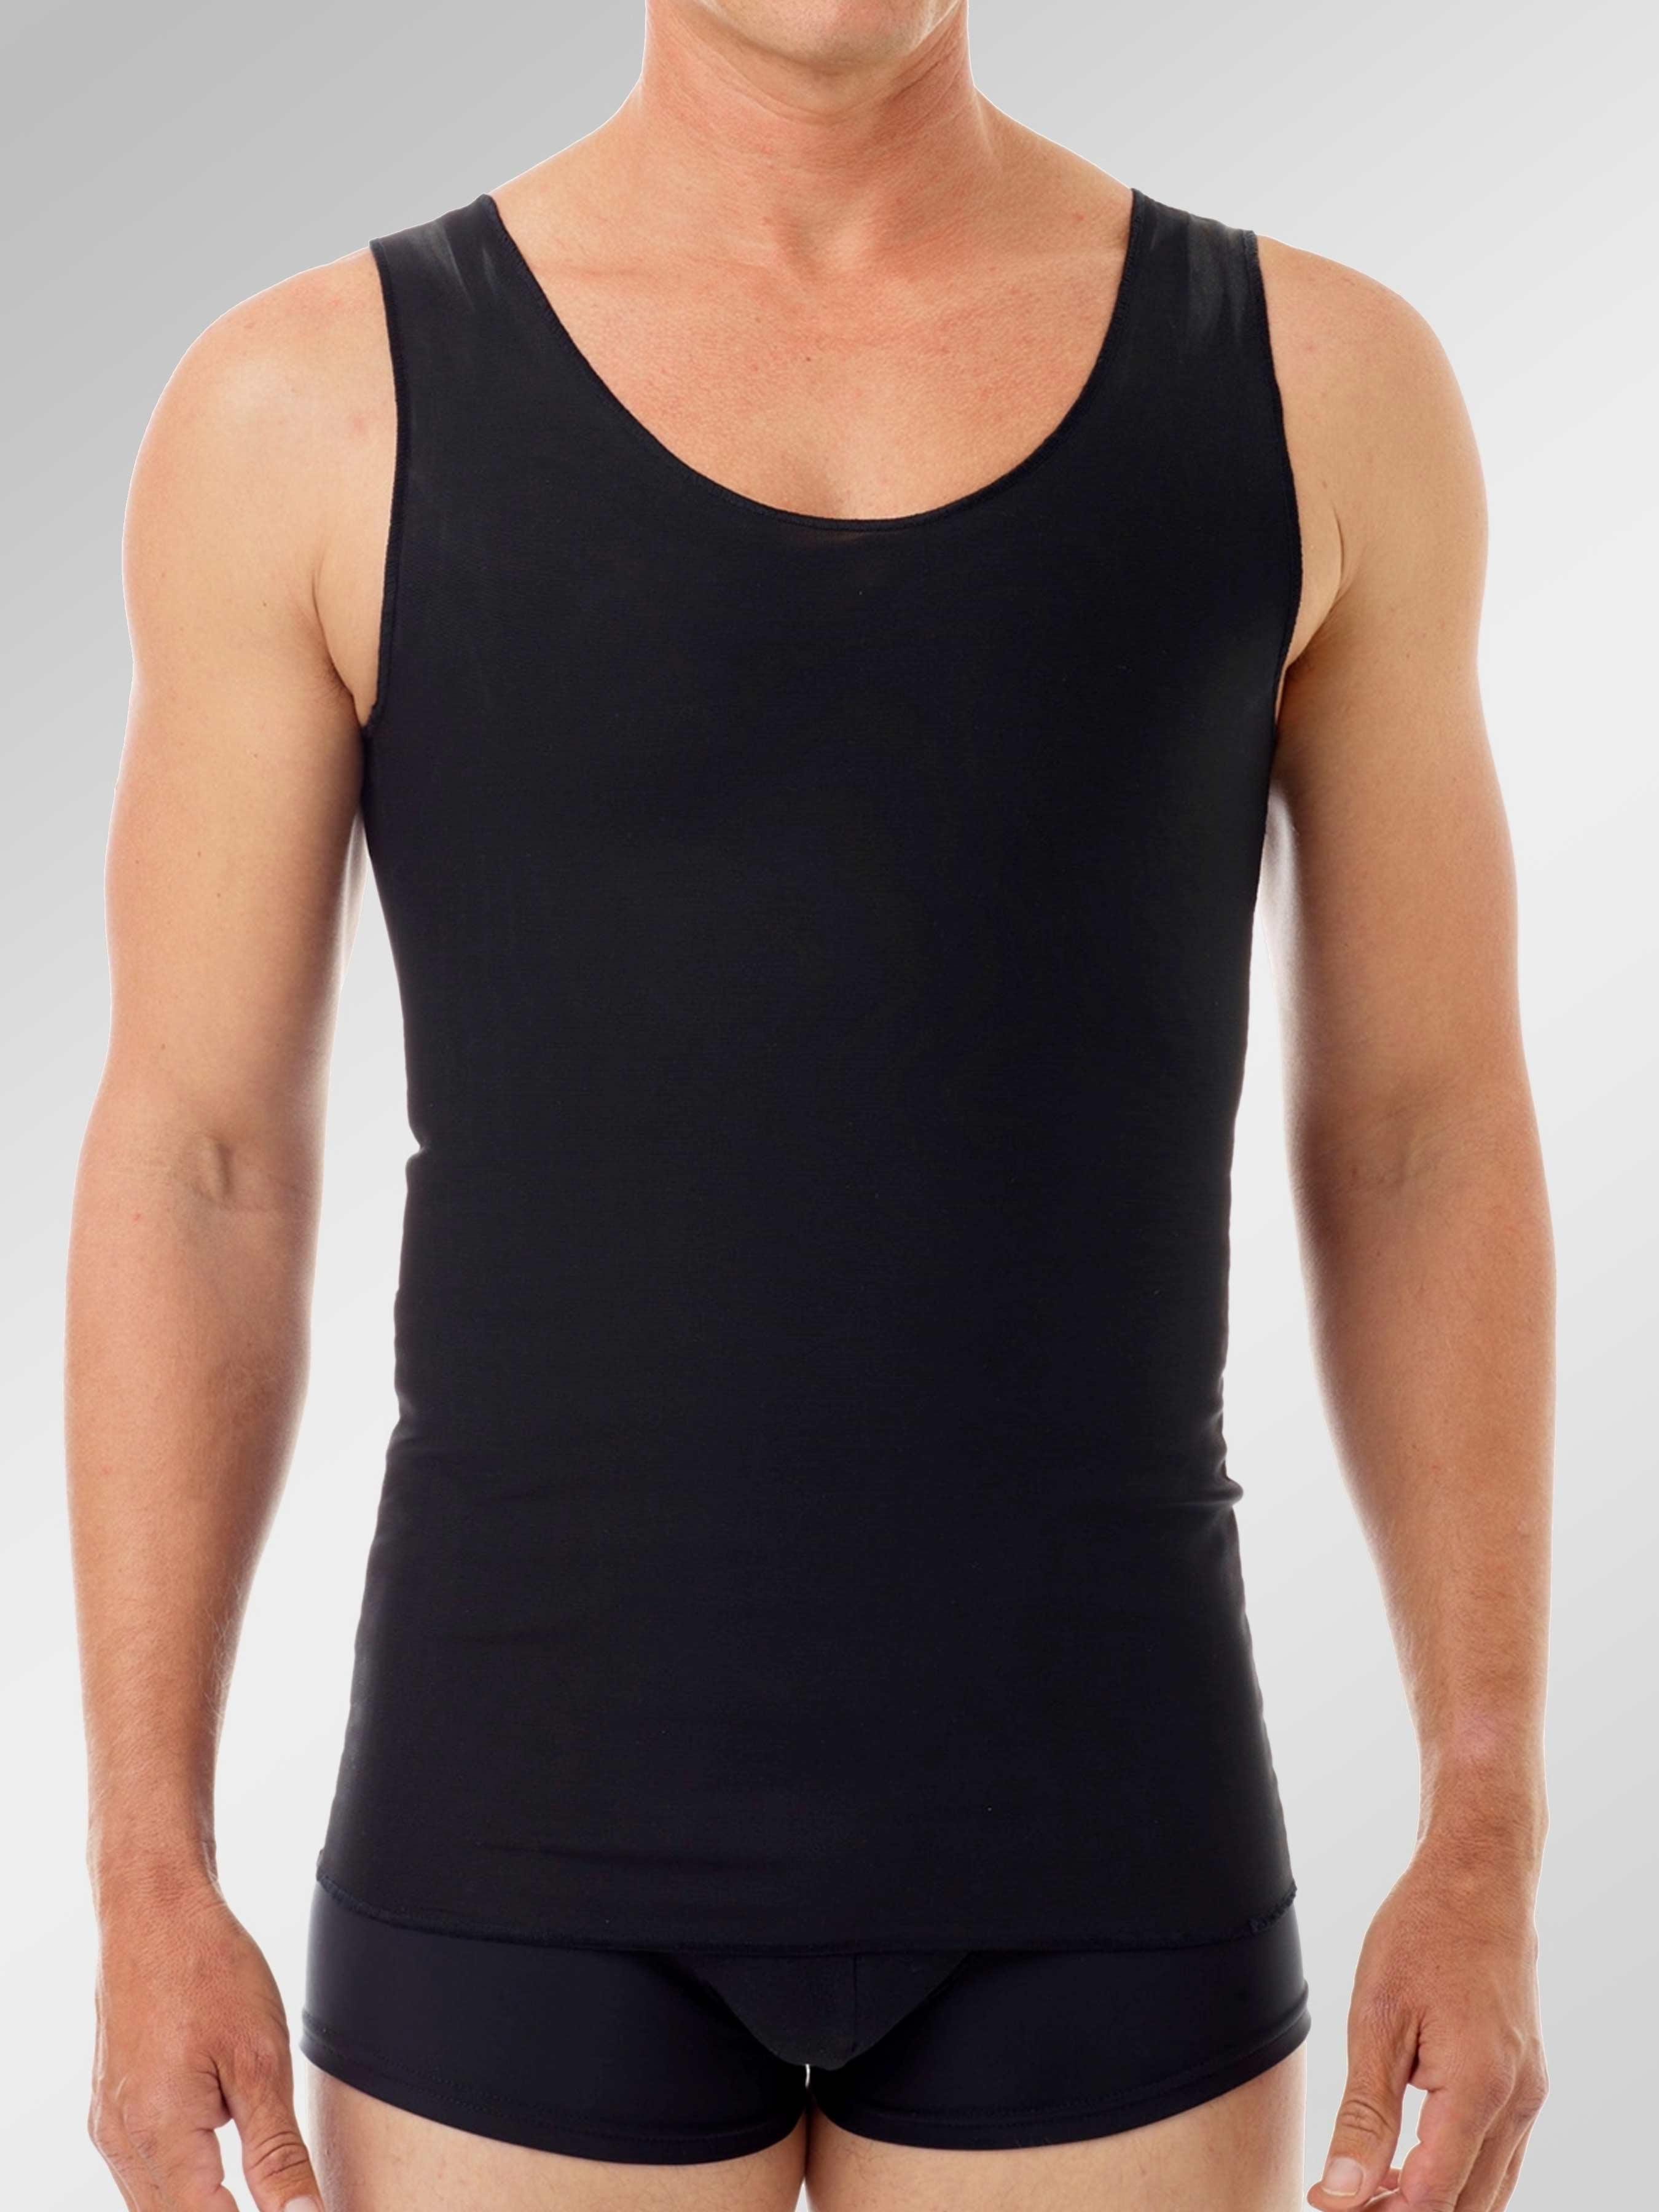 Compression Shirts for Man Boobs, Gynecomastia and FTM's | XBODY UK